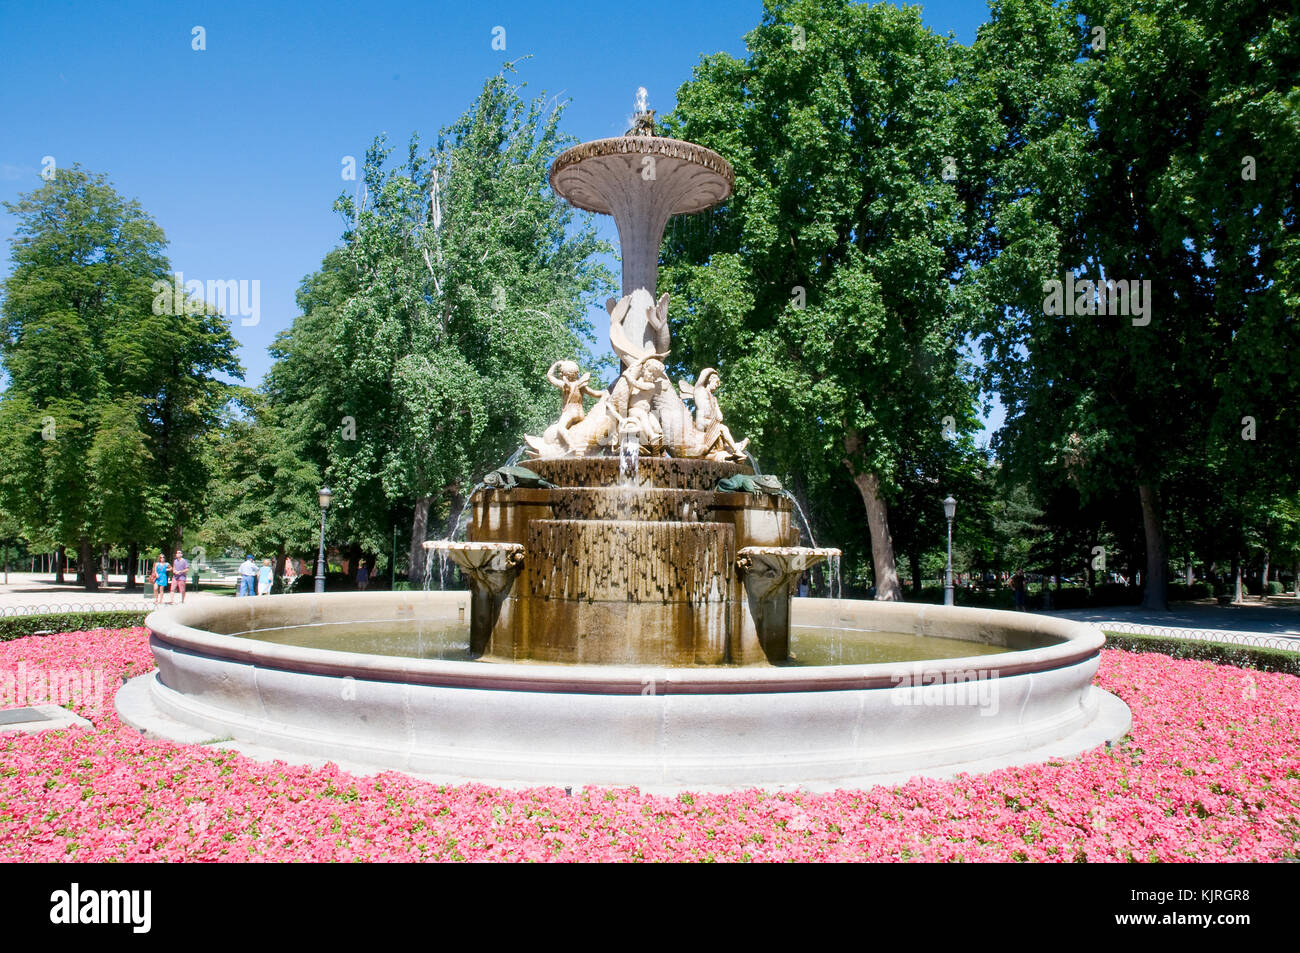 Fountain with pink flowers. The Retiro park, Madrid, Spain. Stock Photo